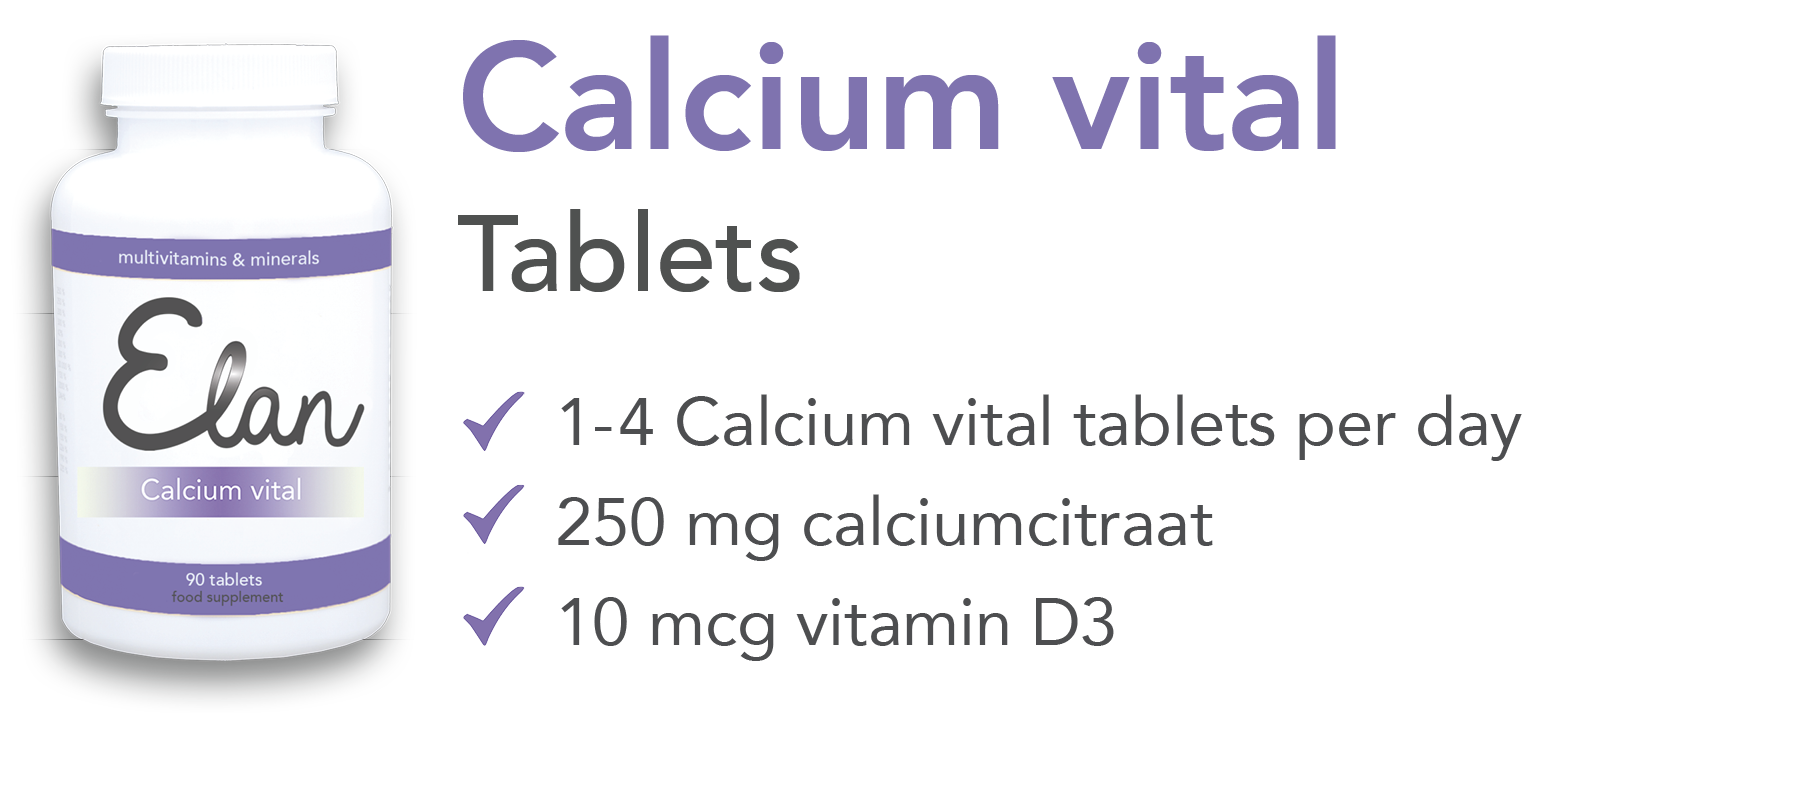 Calcium Vital tablets